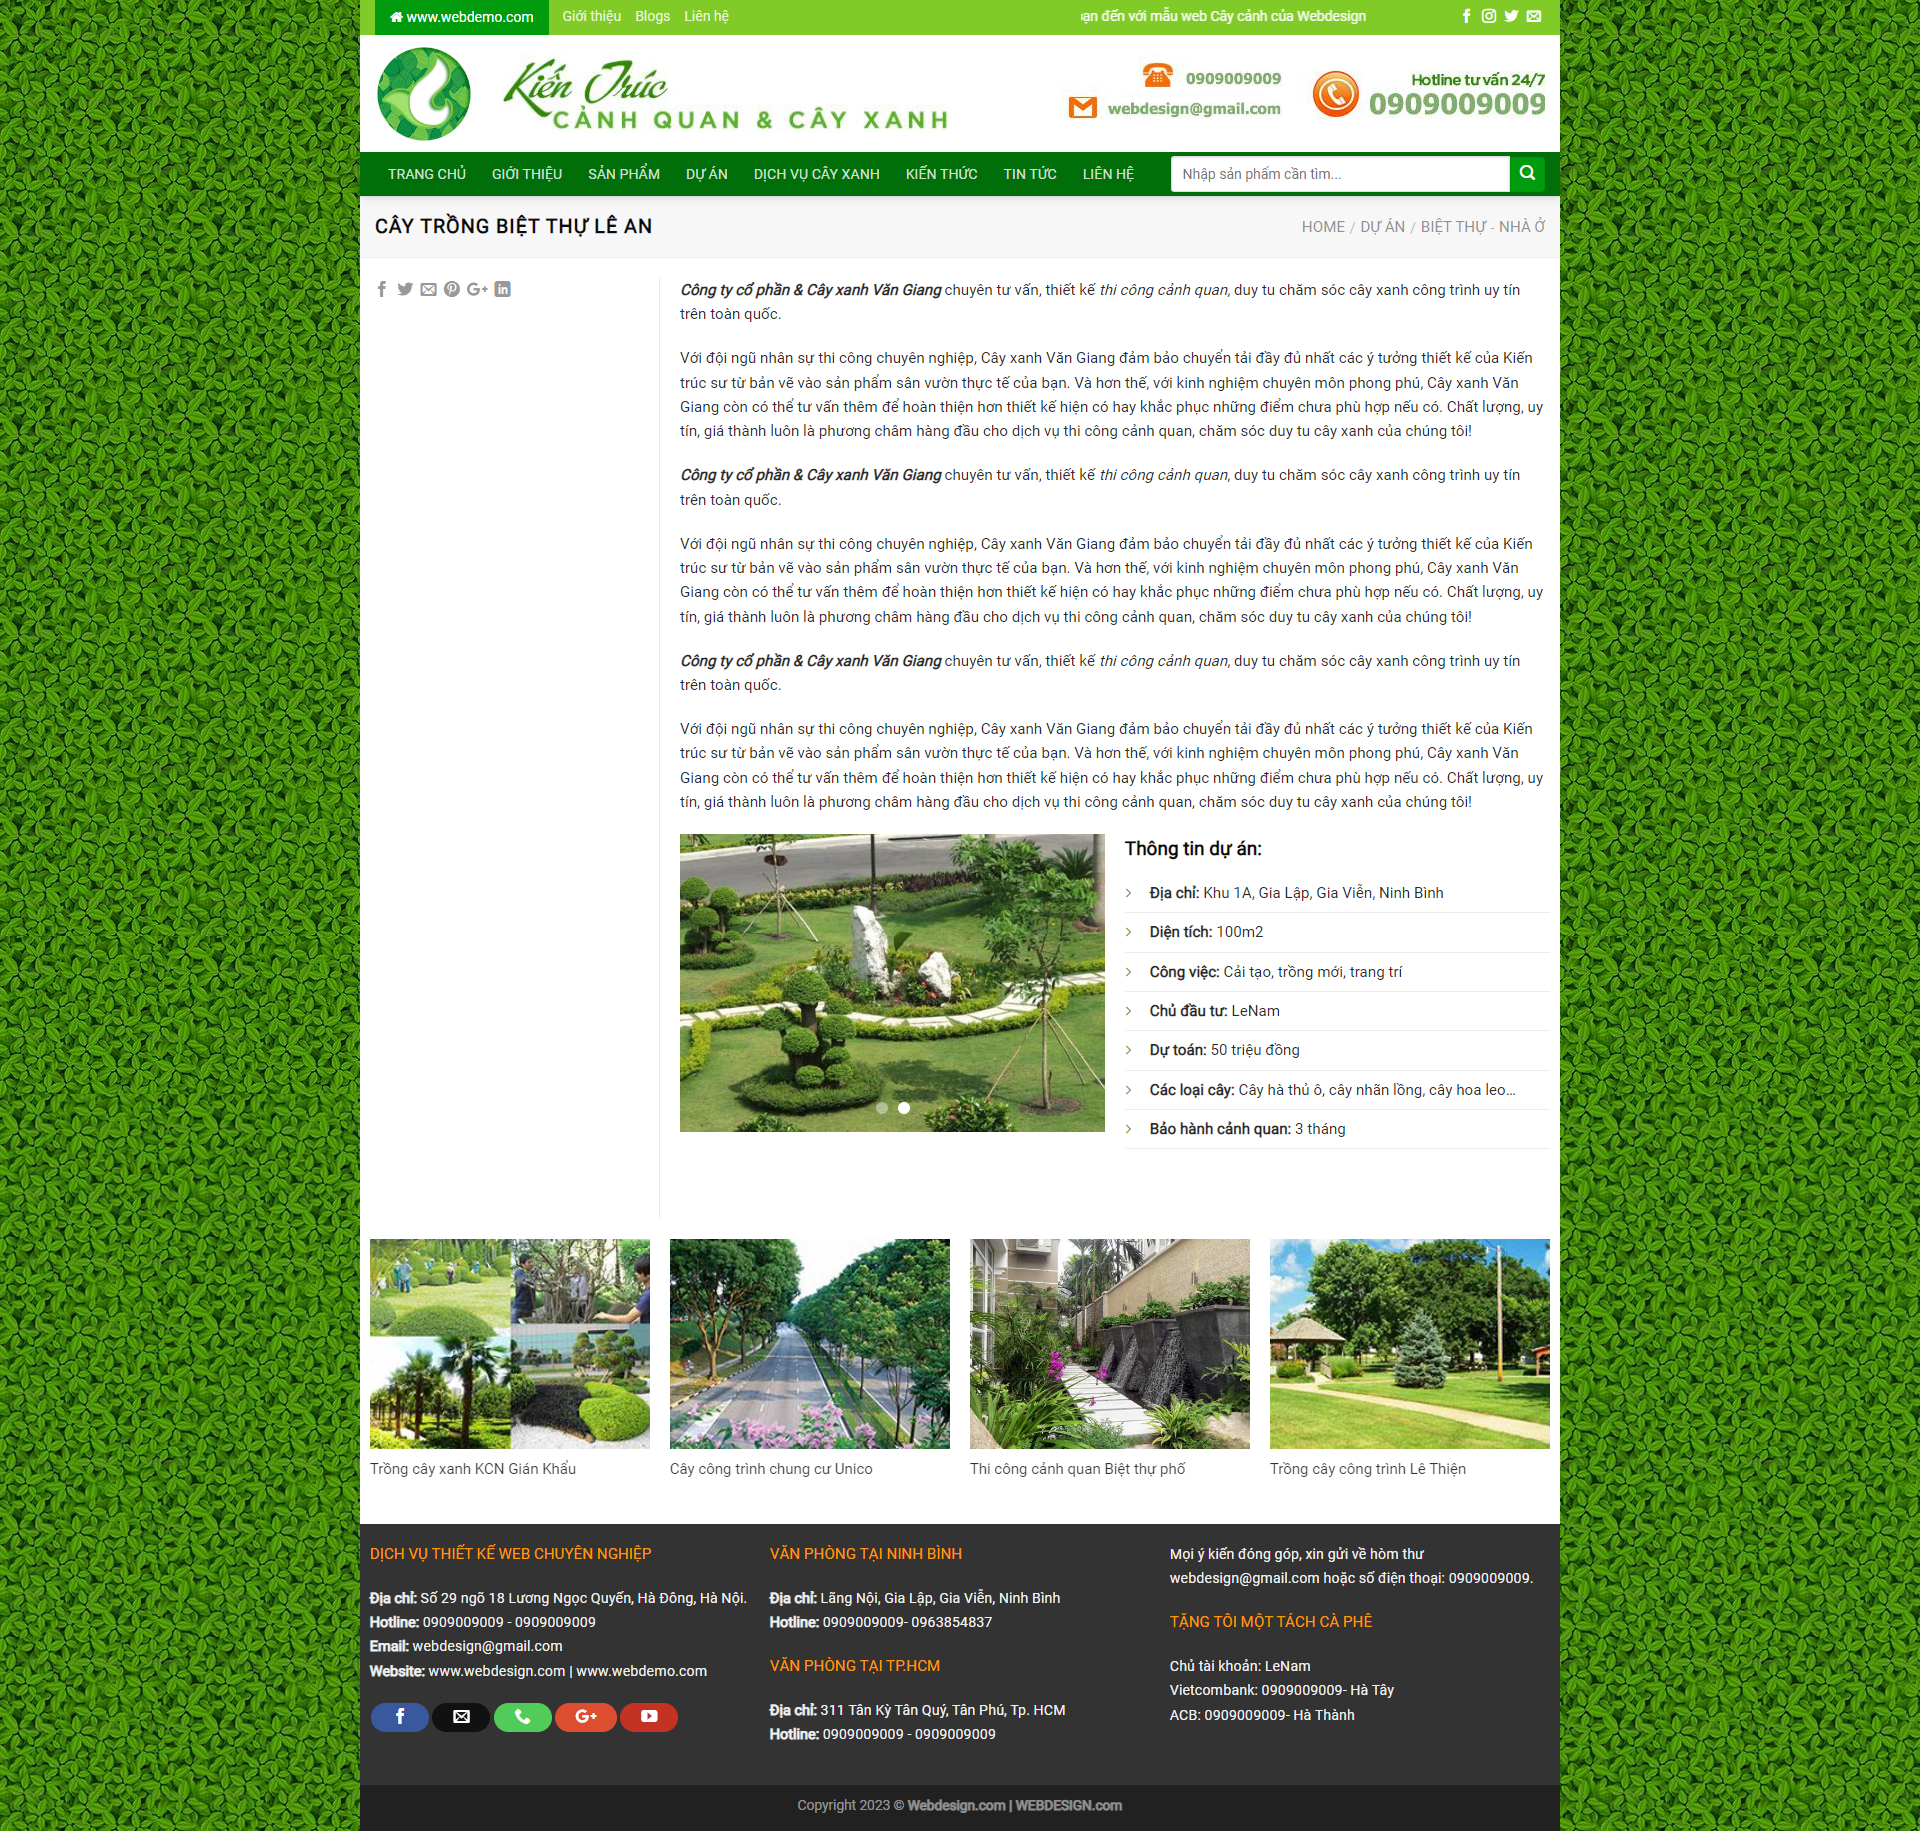 Bonsai tree store website free download